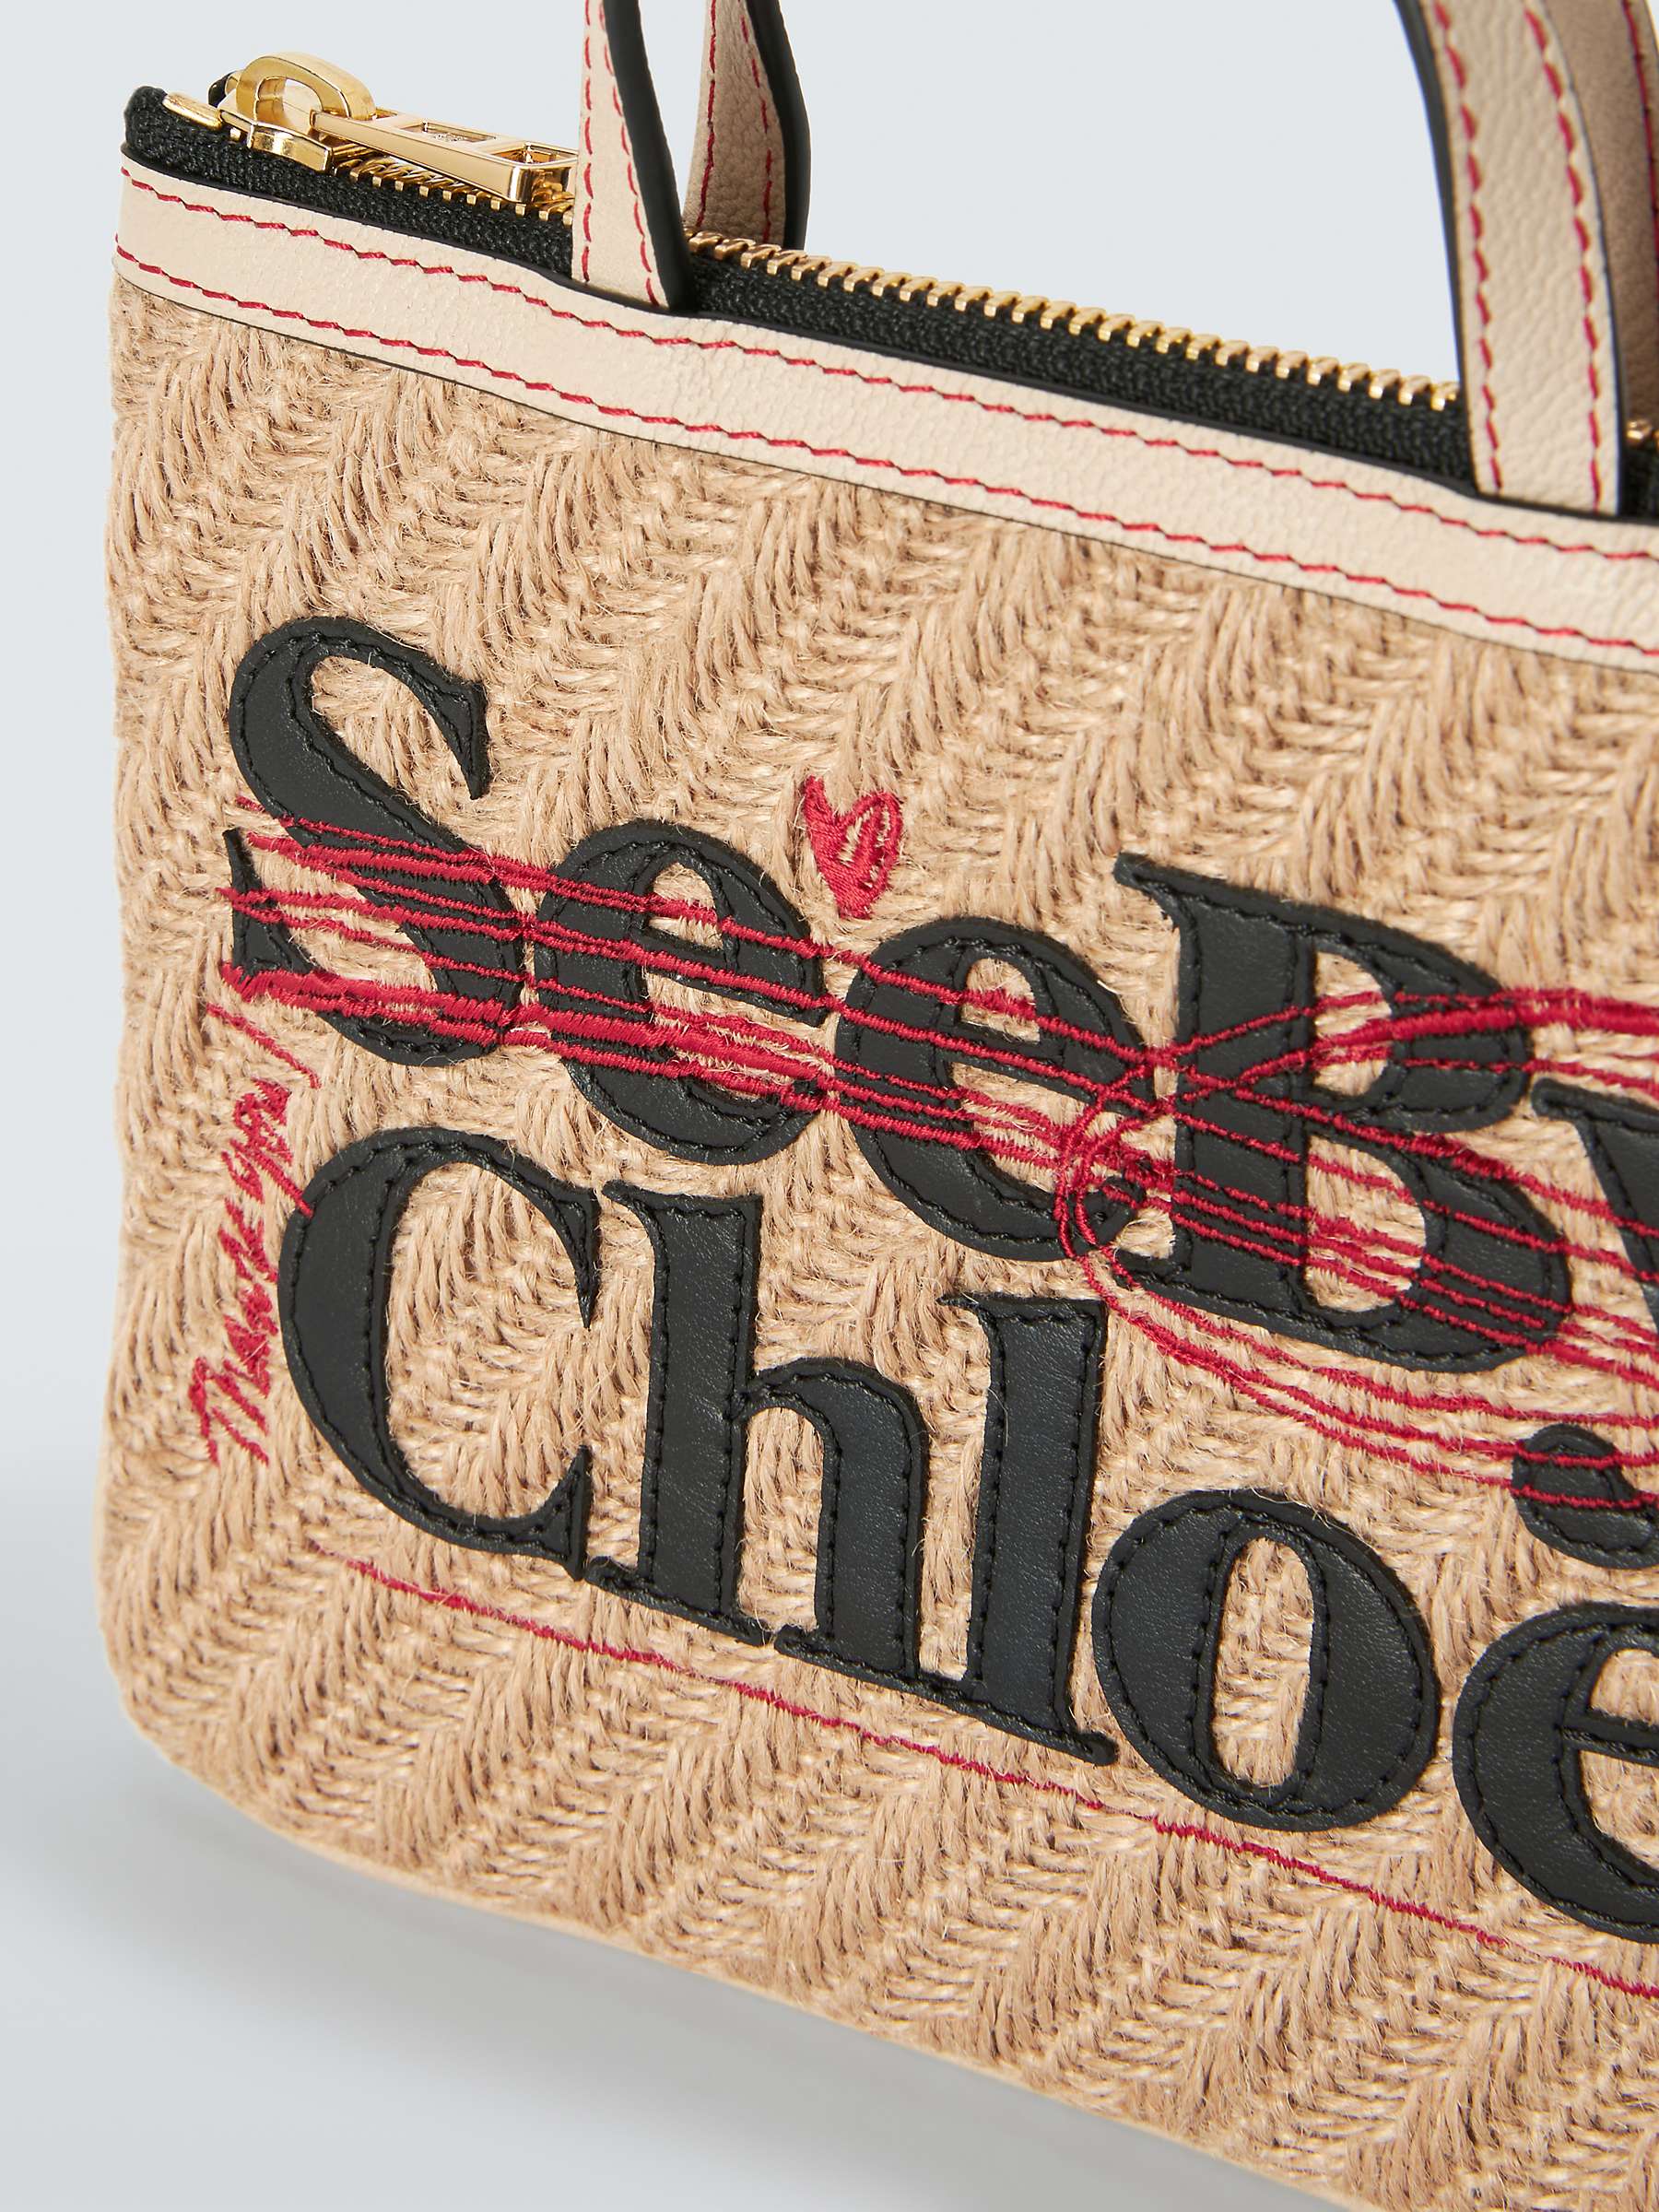 Buy See By Chloé Logo Straw Tote Bag, Beige Online at johnlewis.com